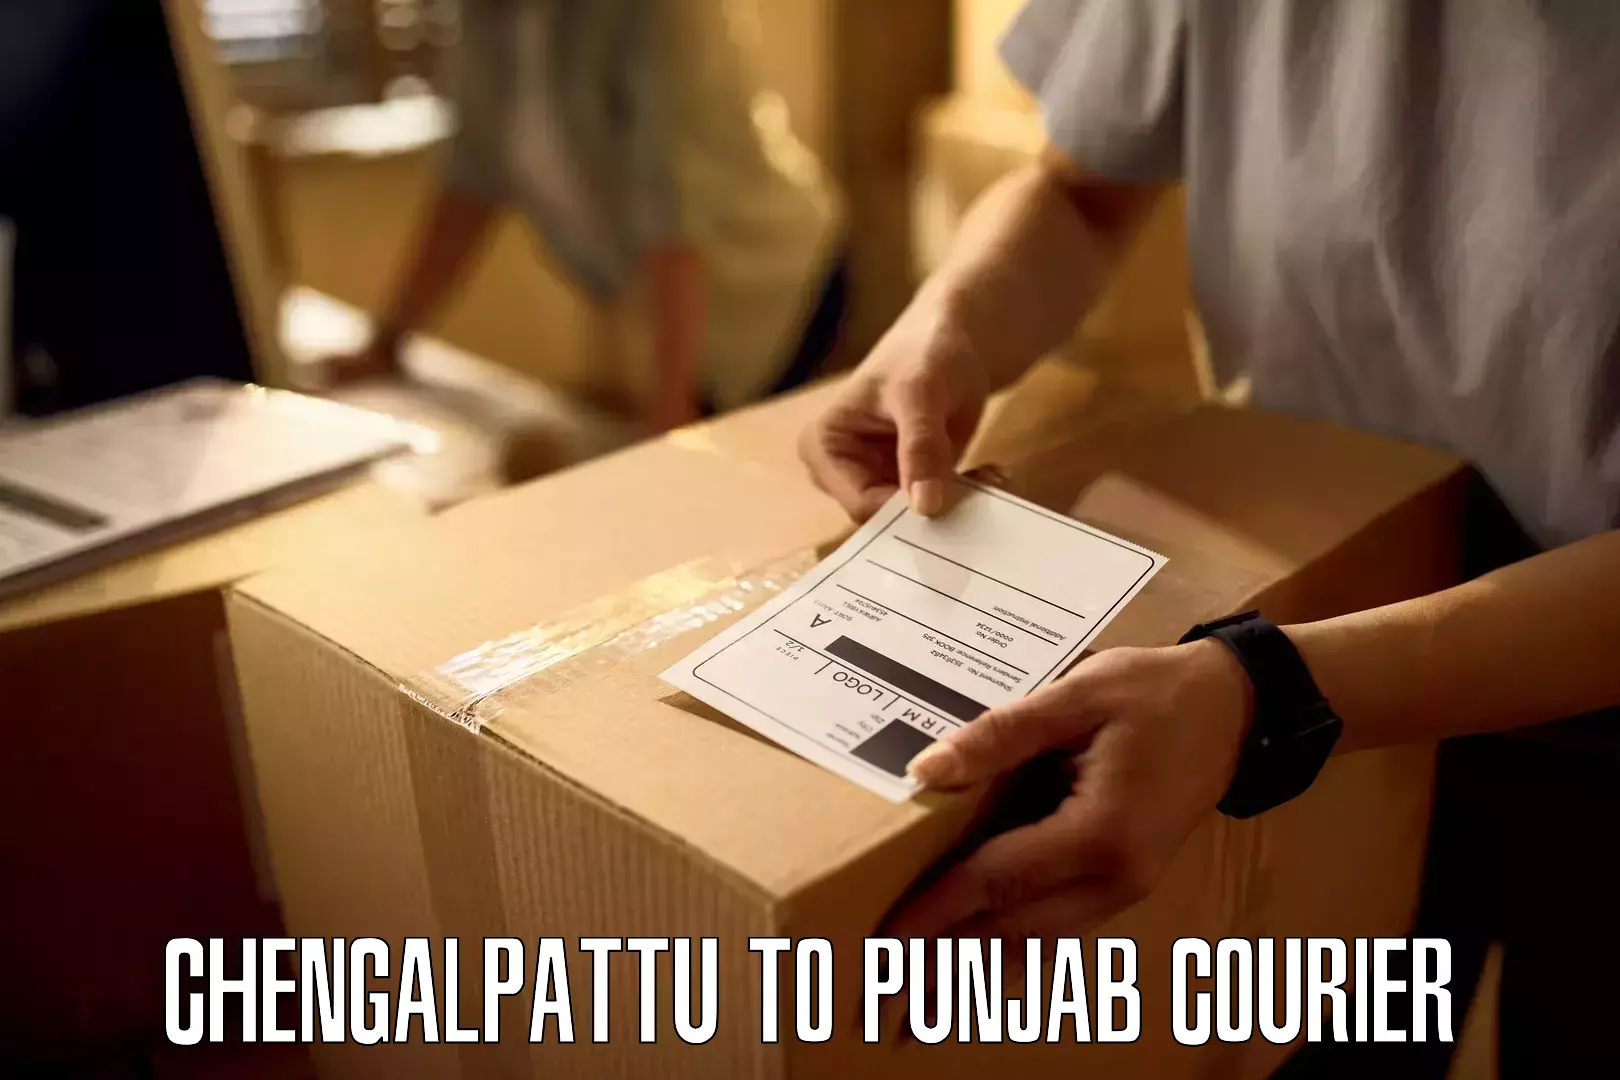 On-call courier service Chengalpattu to Punjab